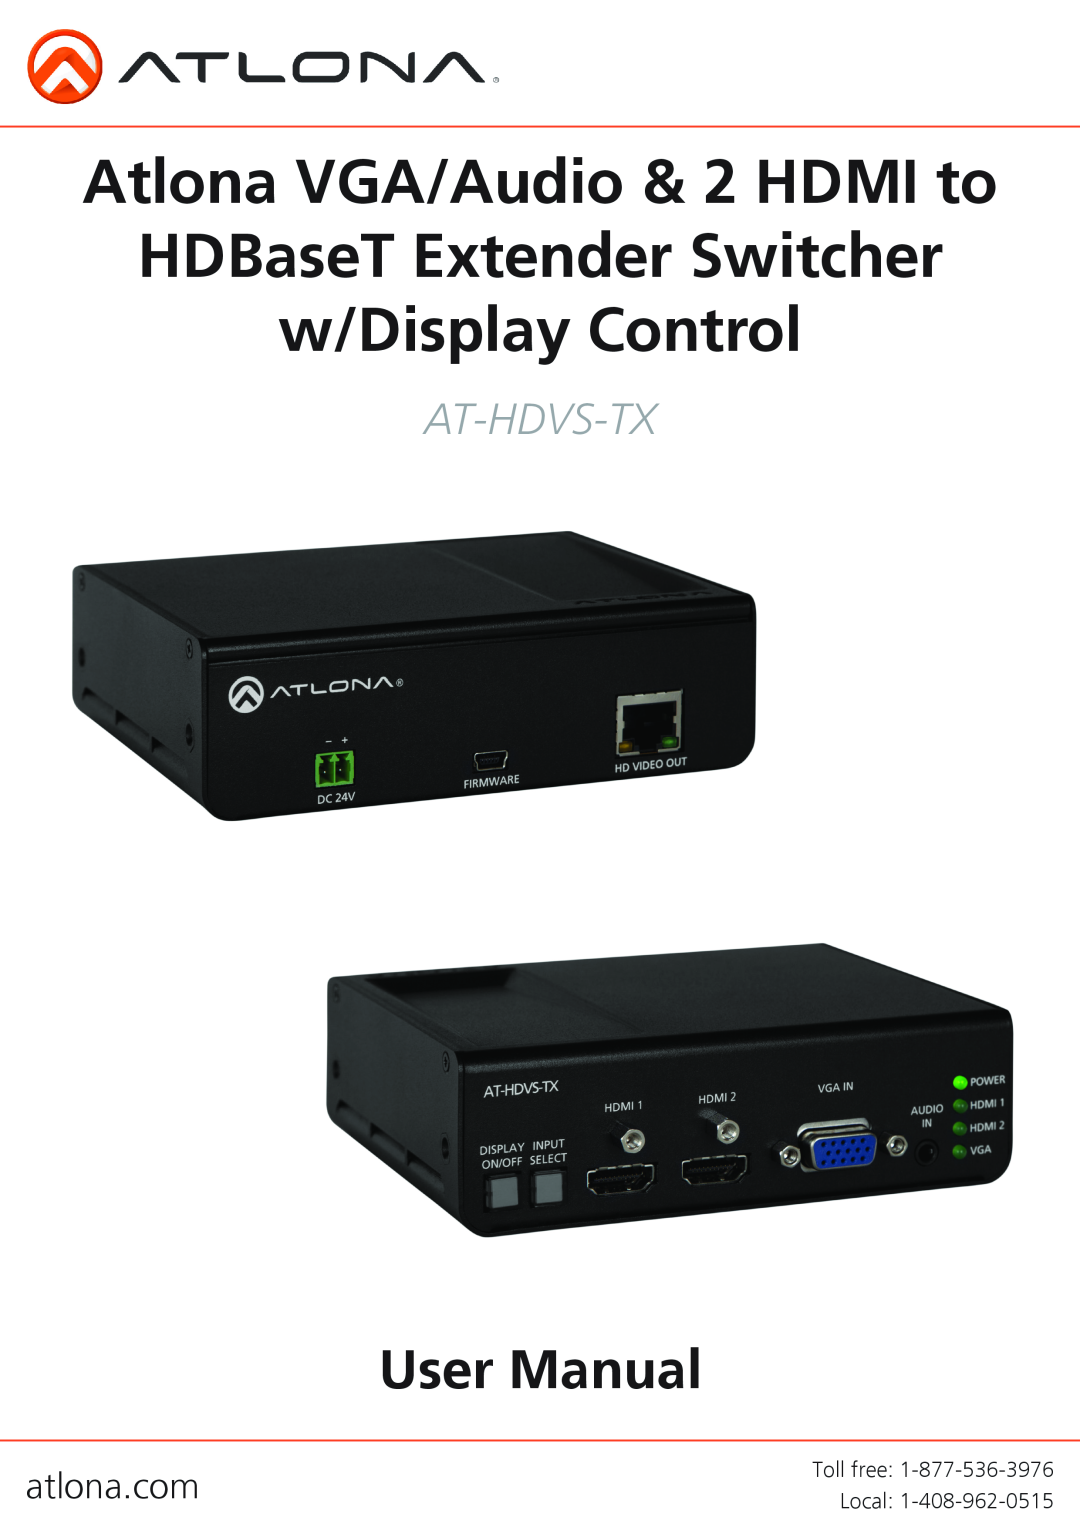 Atlona AT-HDVS-TX user manual atlona.com, Atlona VGA/Audio & 2 HDMI to HDBaseT Extender Switcher, w/Display Control 